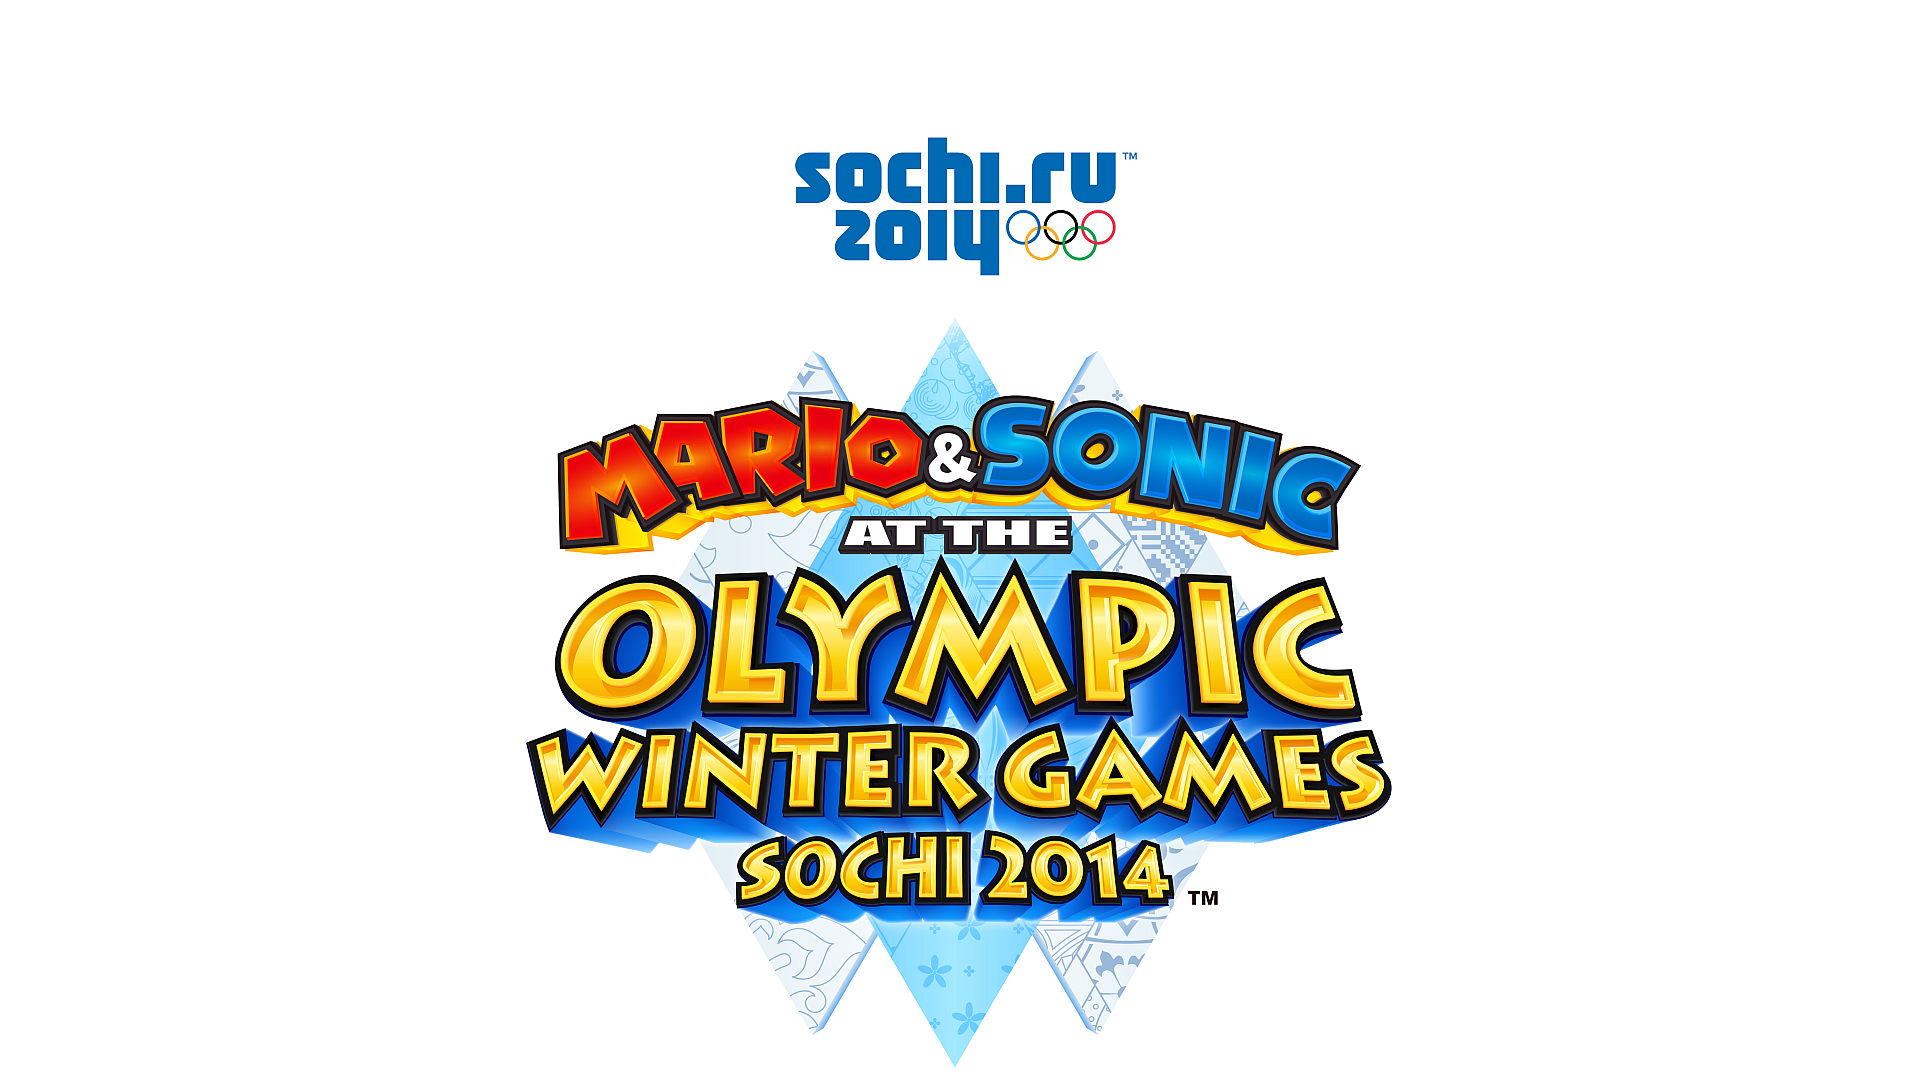 High Resolution Wallpaper | Winter Olimpic Games Sochi 2014 1920x1080 px